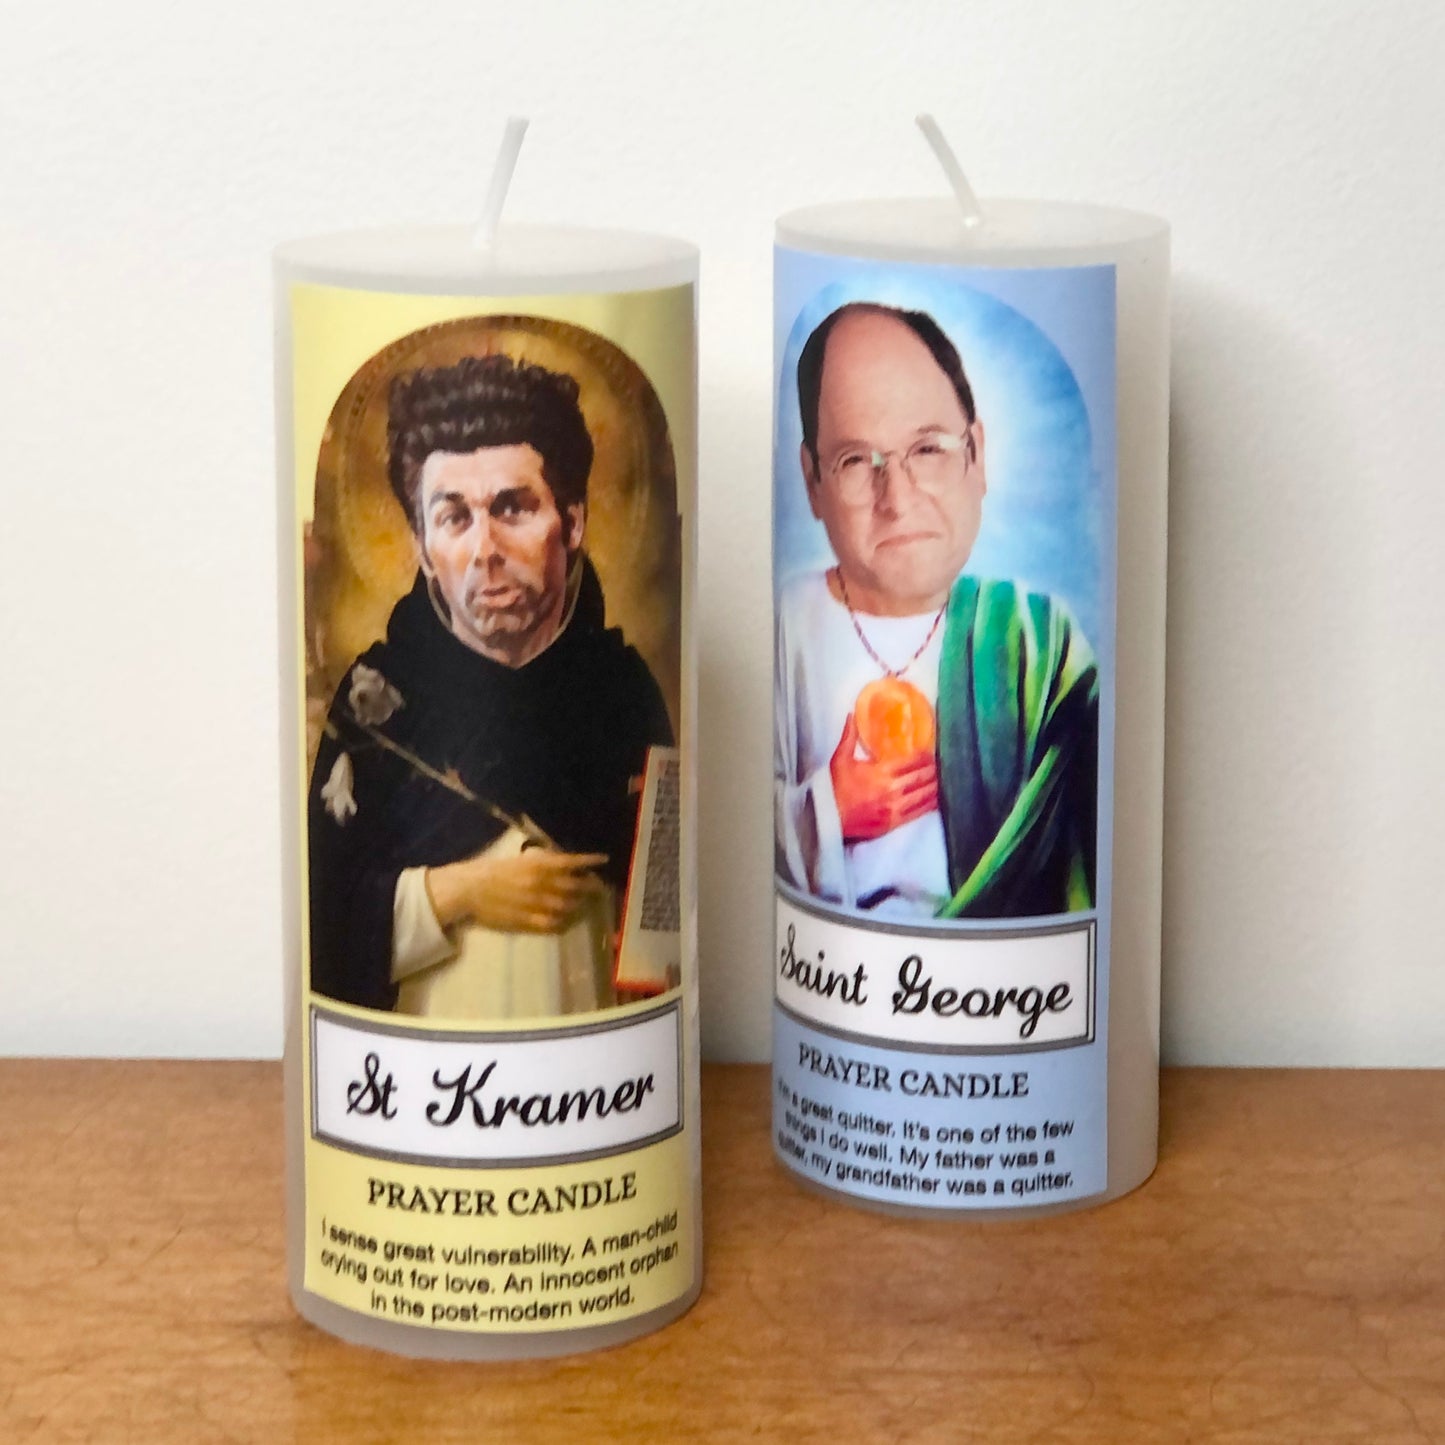 Seinfeld / Kramer / George prayer candle